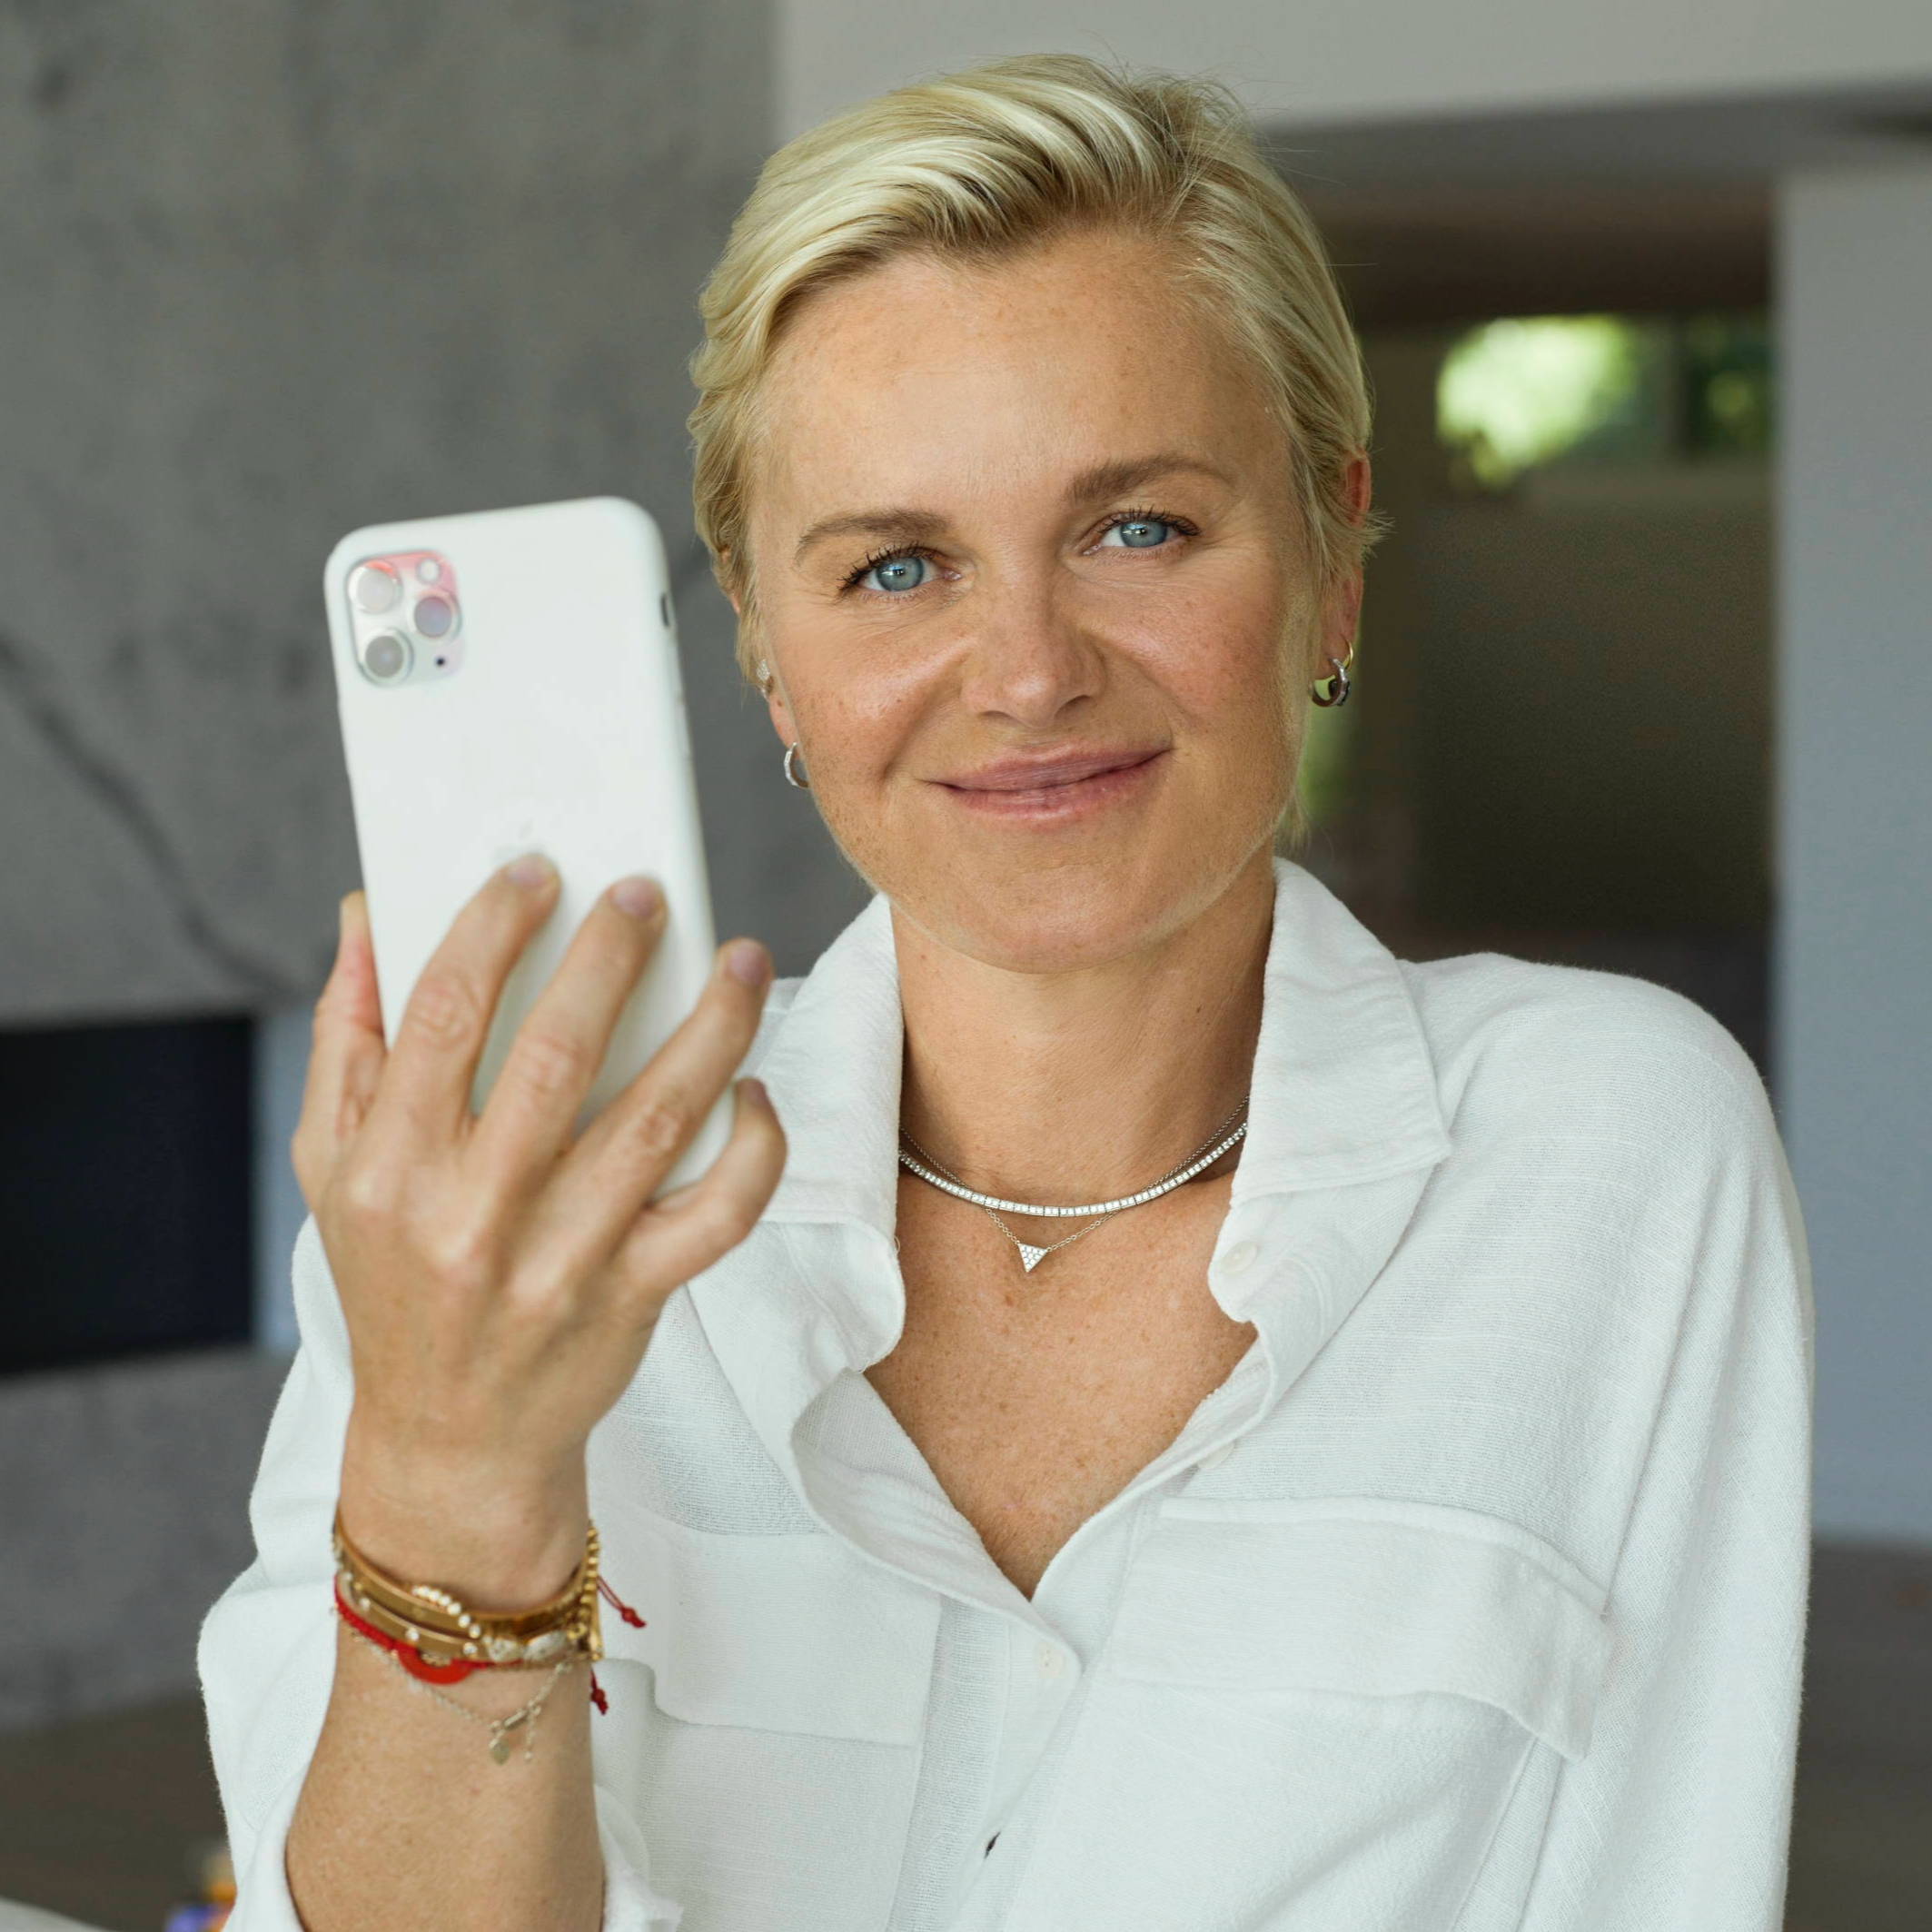 Dr Barbara Sturm holding a white iphone